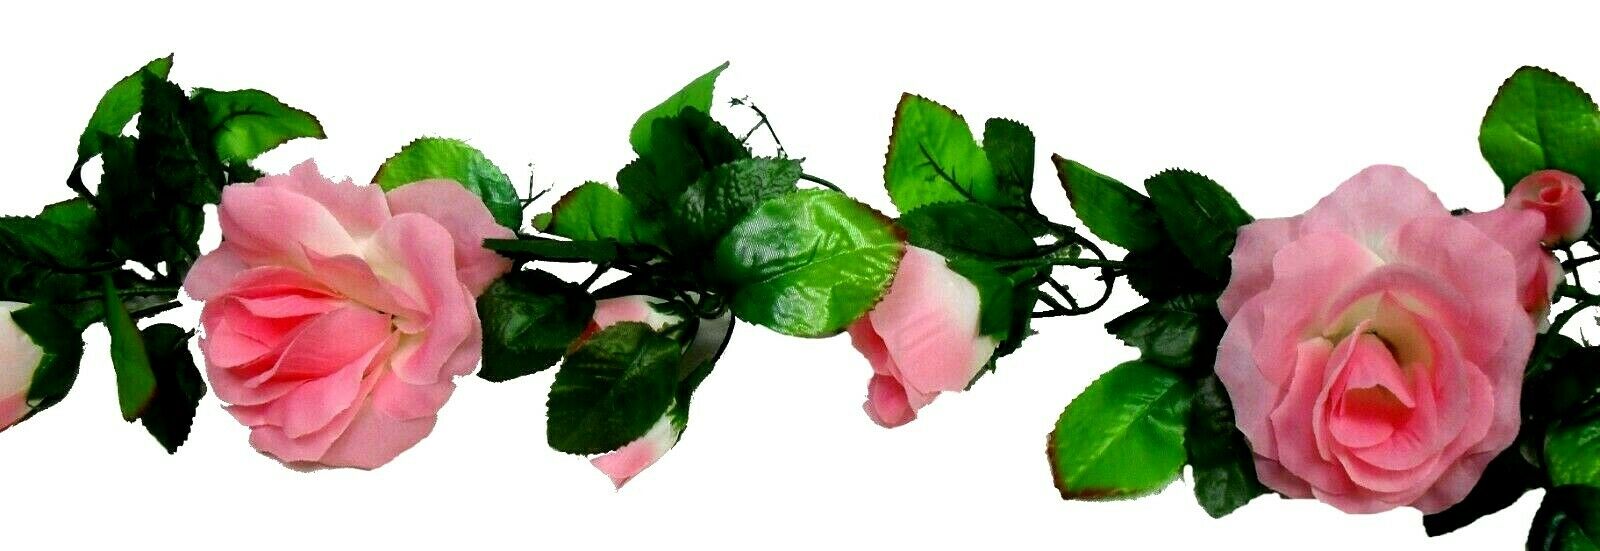 Rose Garland Silk Artificial Flowers Wedding Arch Vines Hanging Greenery Fake